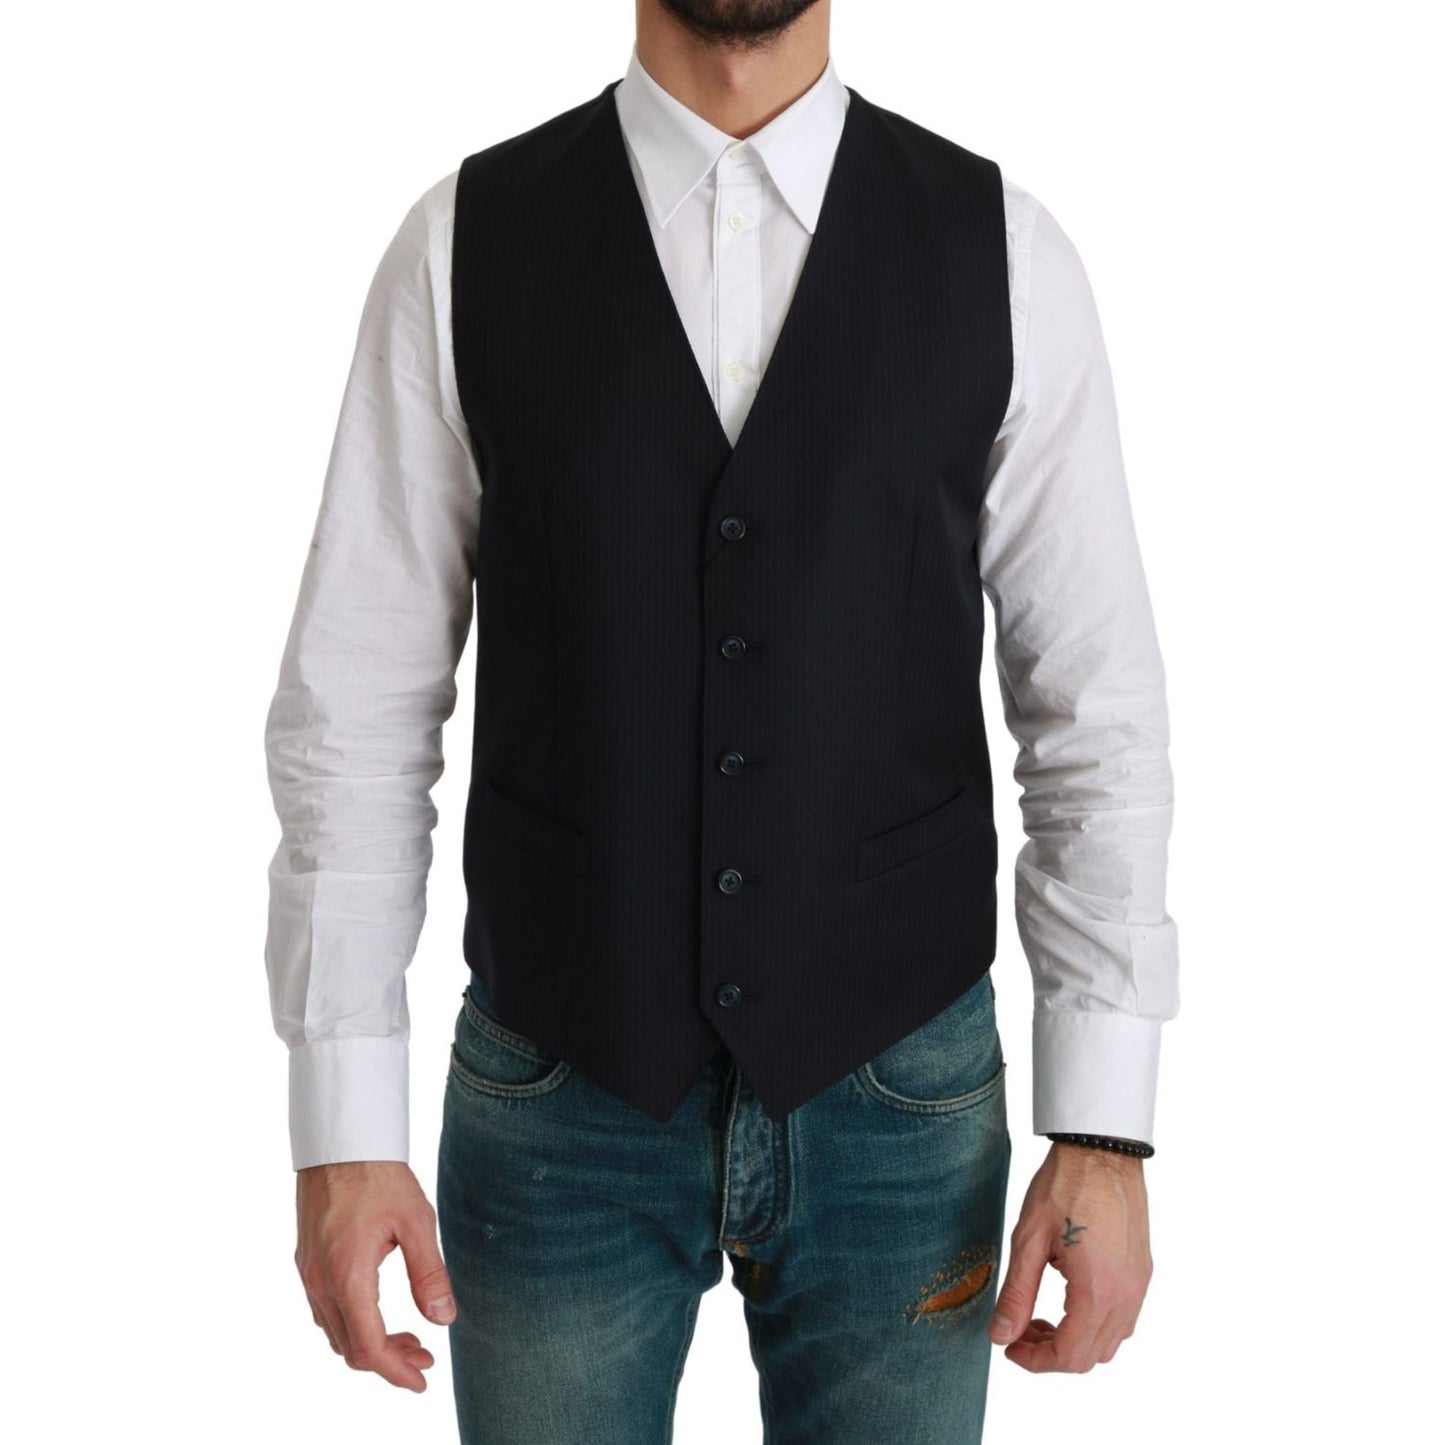 Dolce & Gabbana Elegant Blue Striped Dress Vest blue-waistcoat-formal-stretch-wool-vest IMG_0248-scaled-ee61f39f-17e.jpg